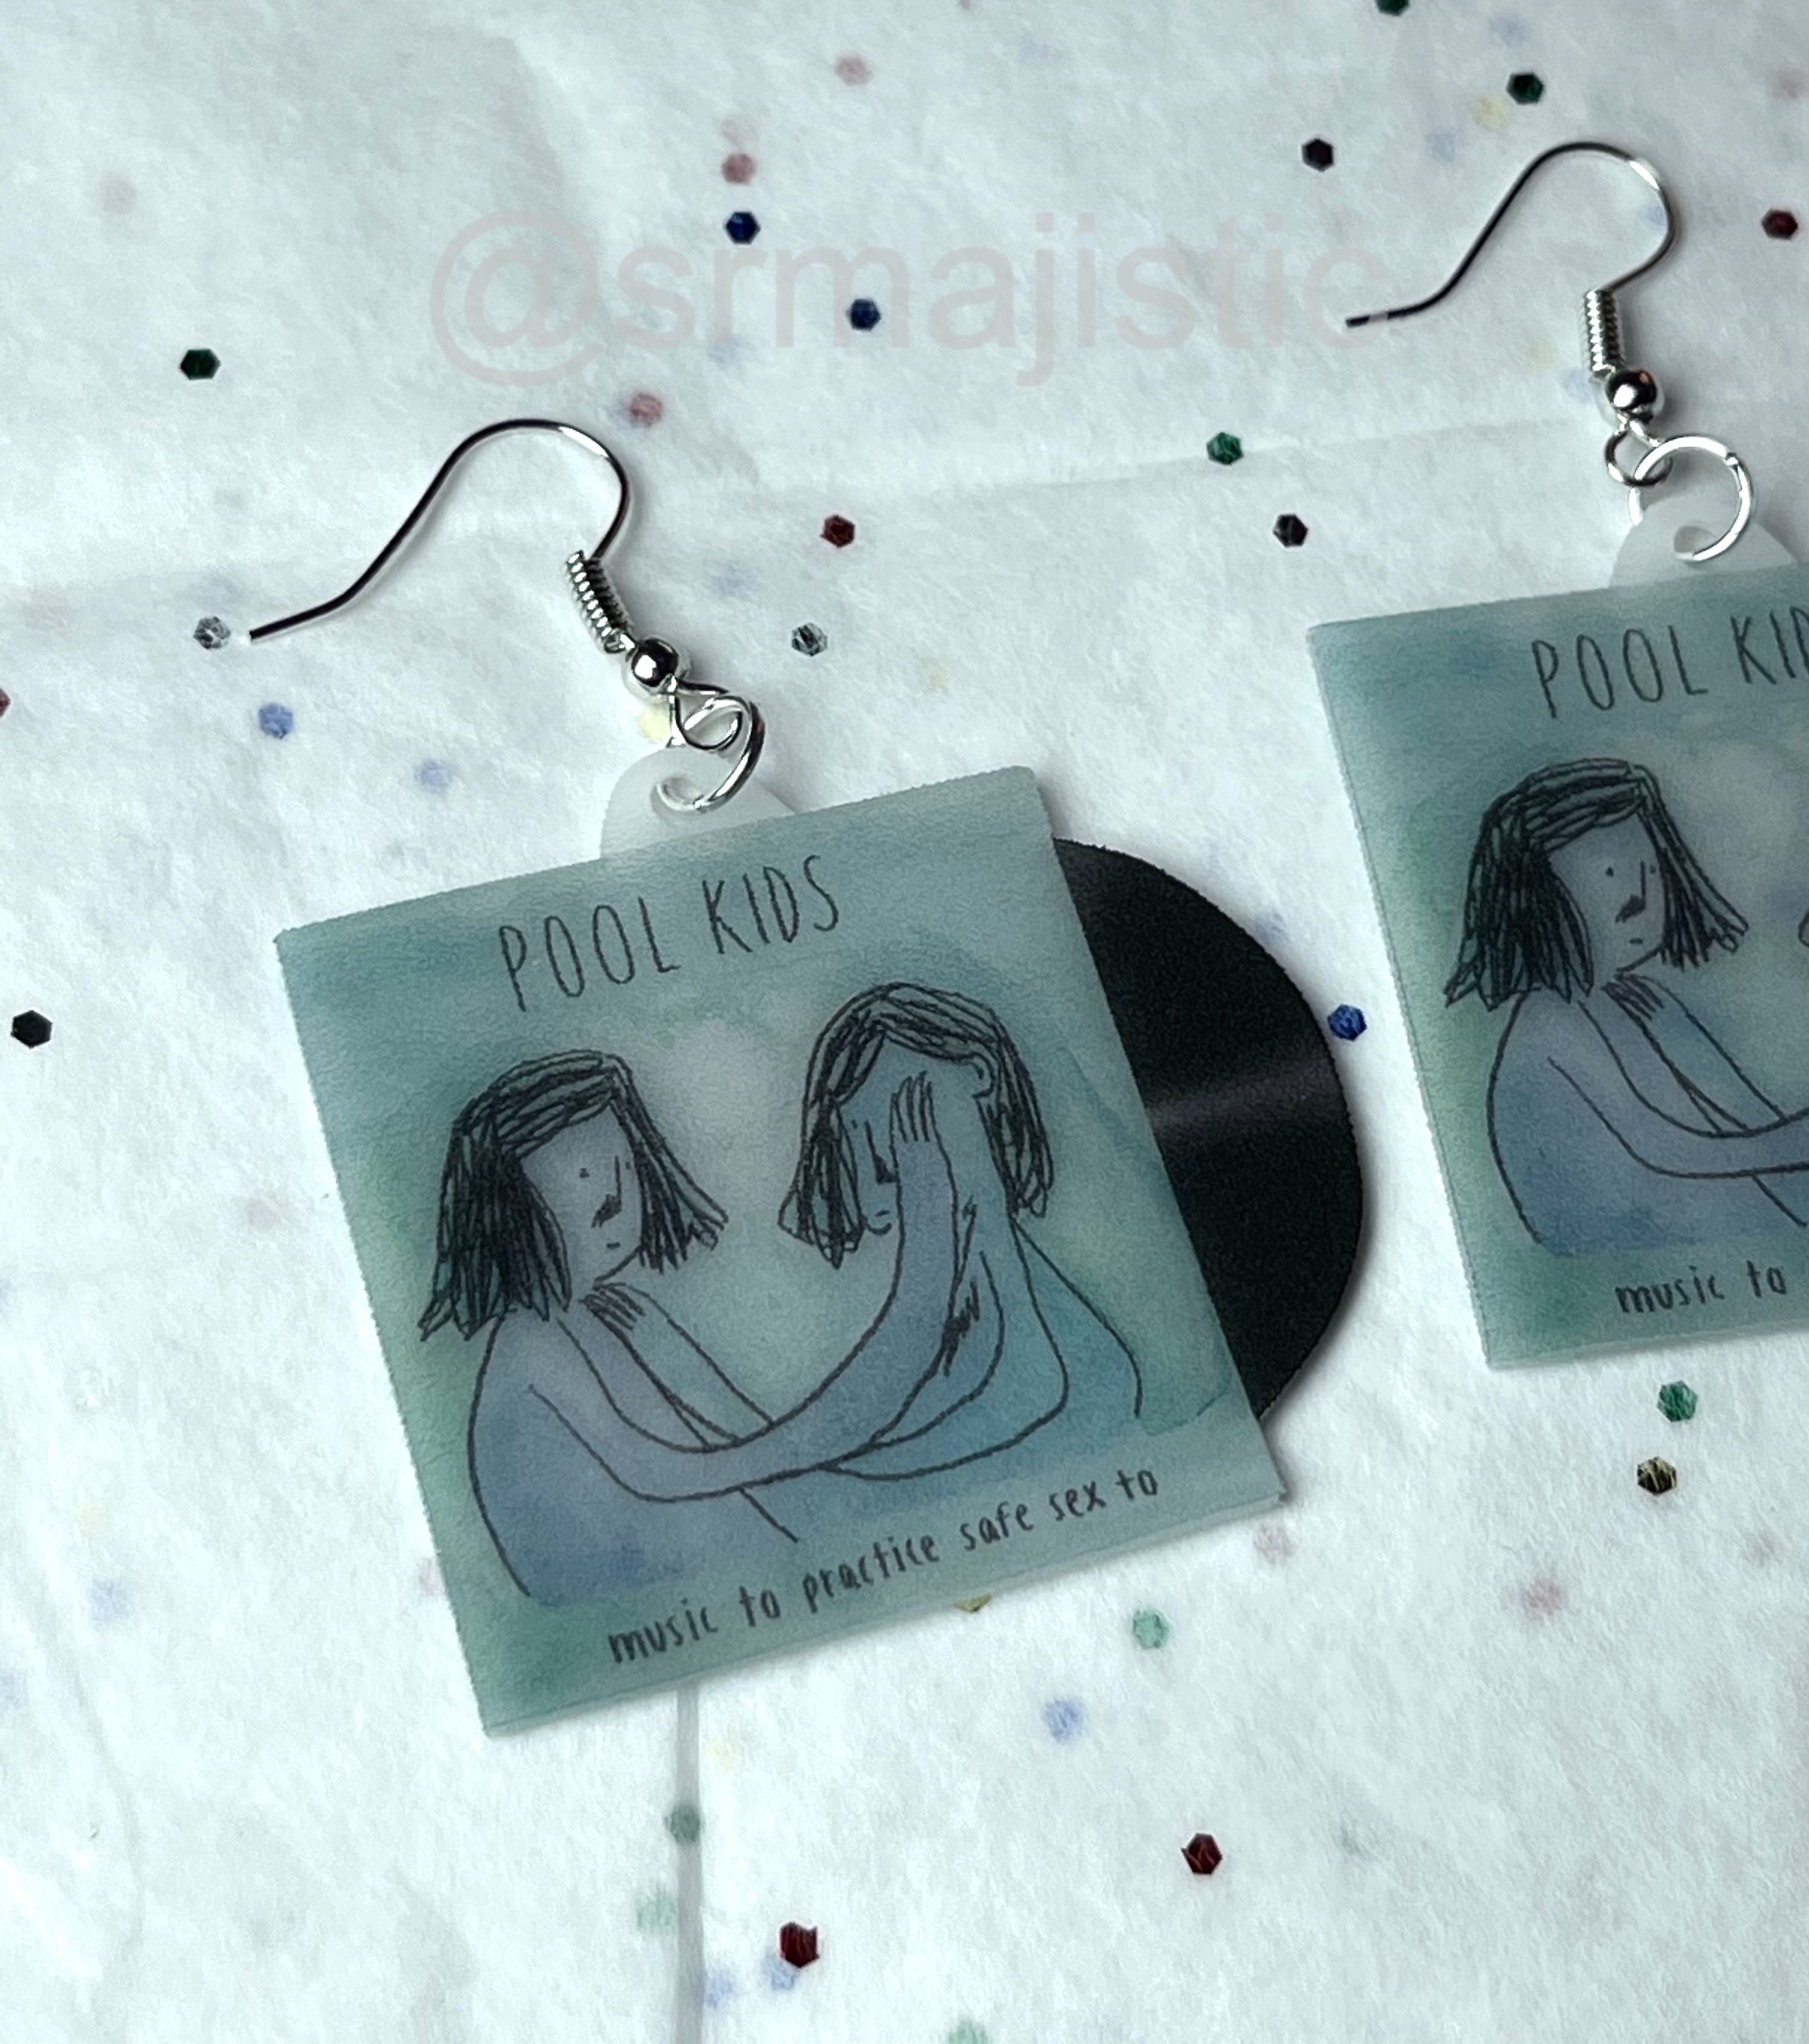 Pool Kids Music to Practice Safe Sex to Vinyl Album Handmade Earrings!